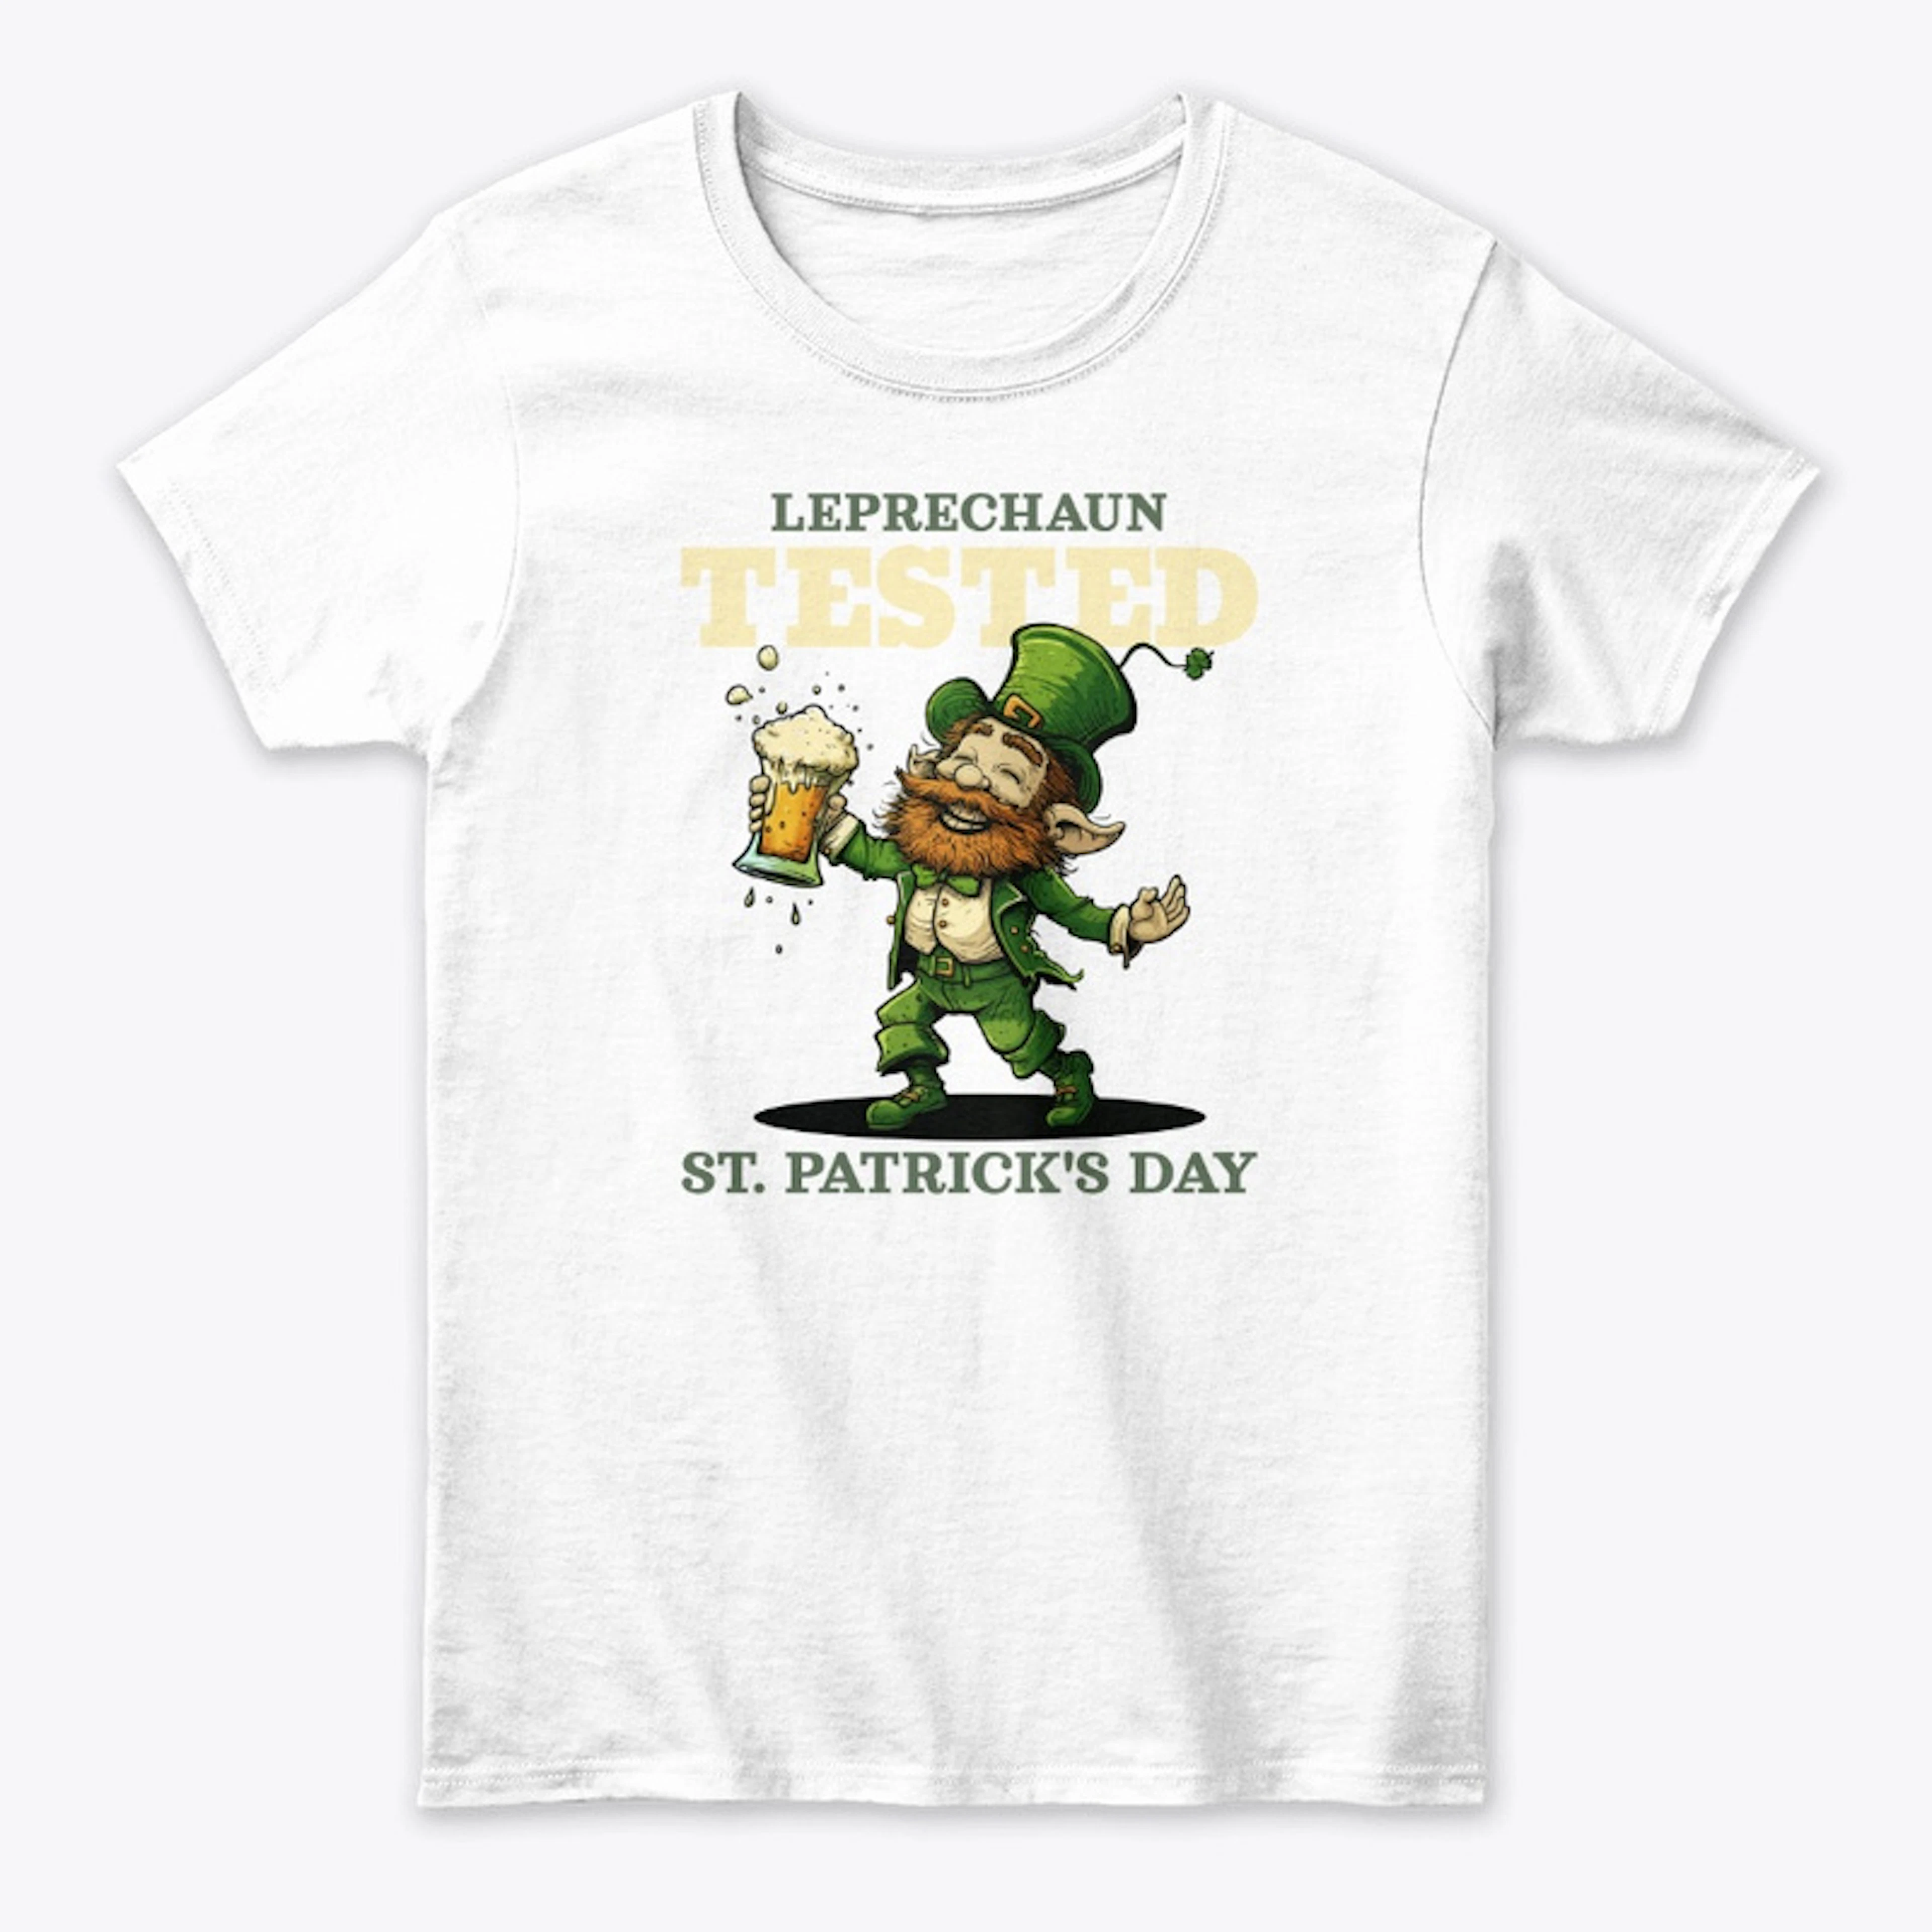 Leprechaun tested St. Patrick's Day